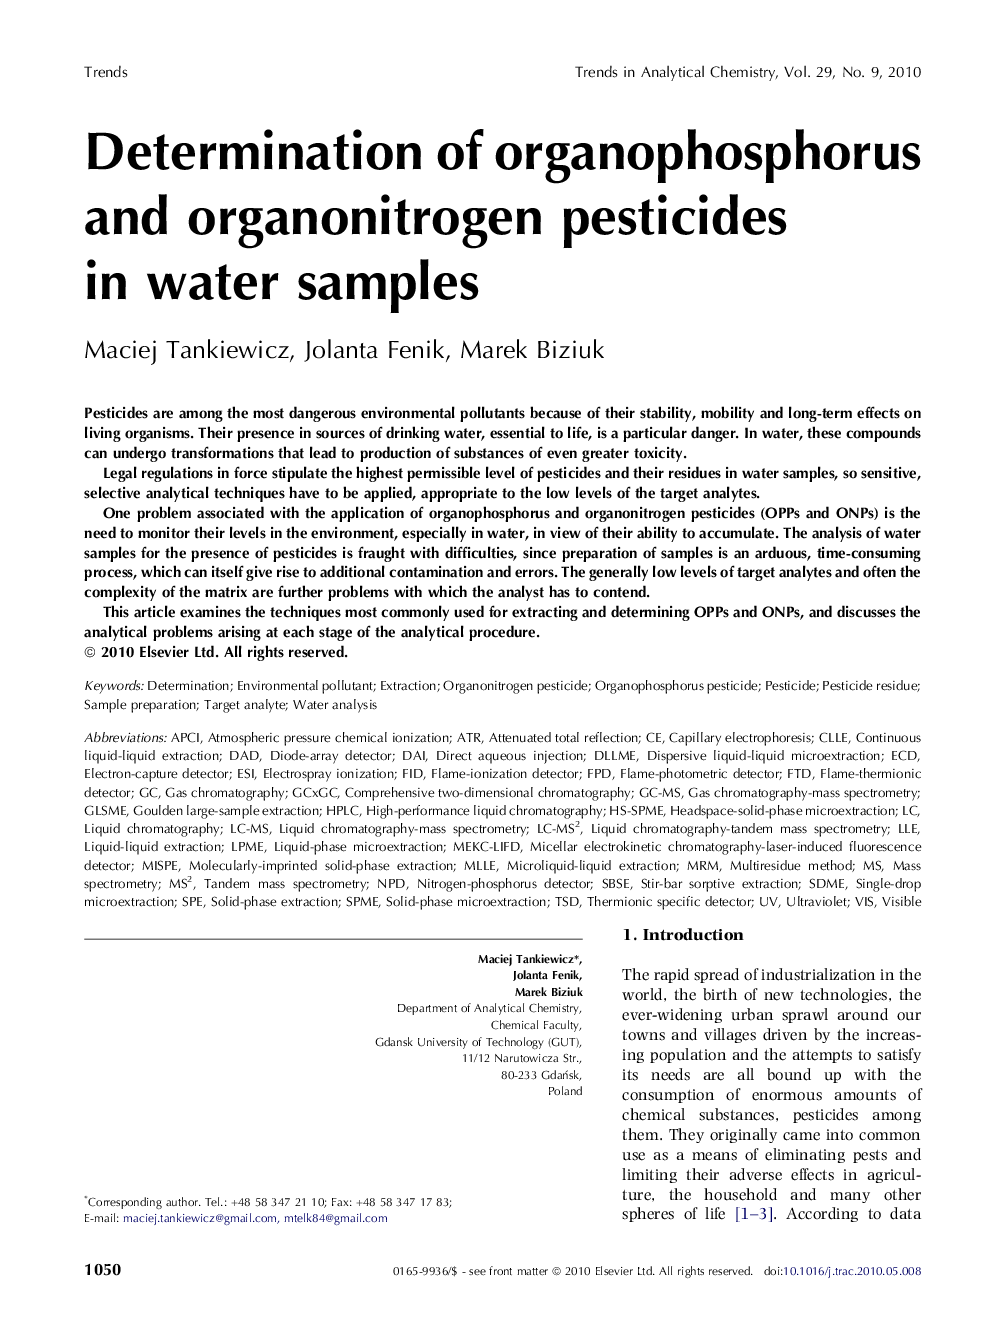 Determination of organophosphorus and organonitrogen pesticides in water samples